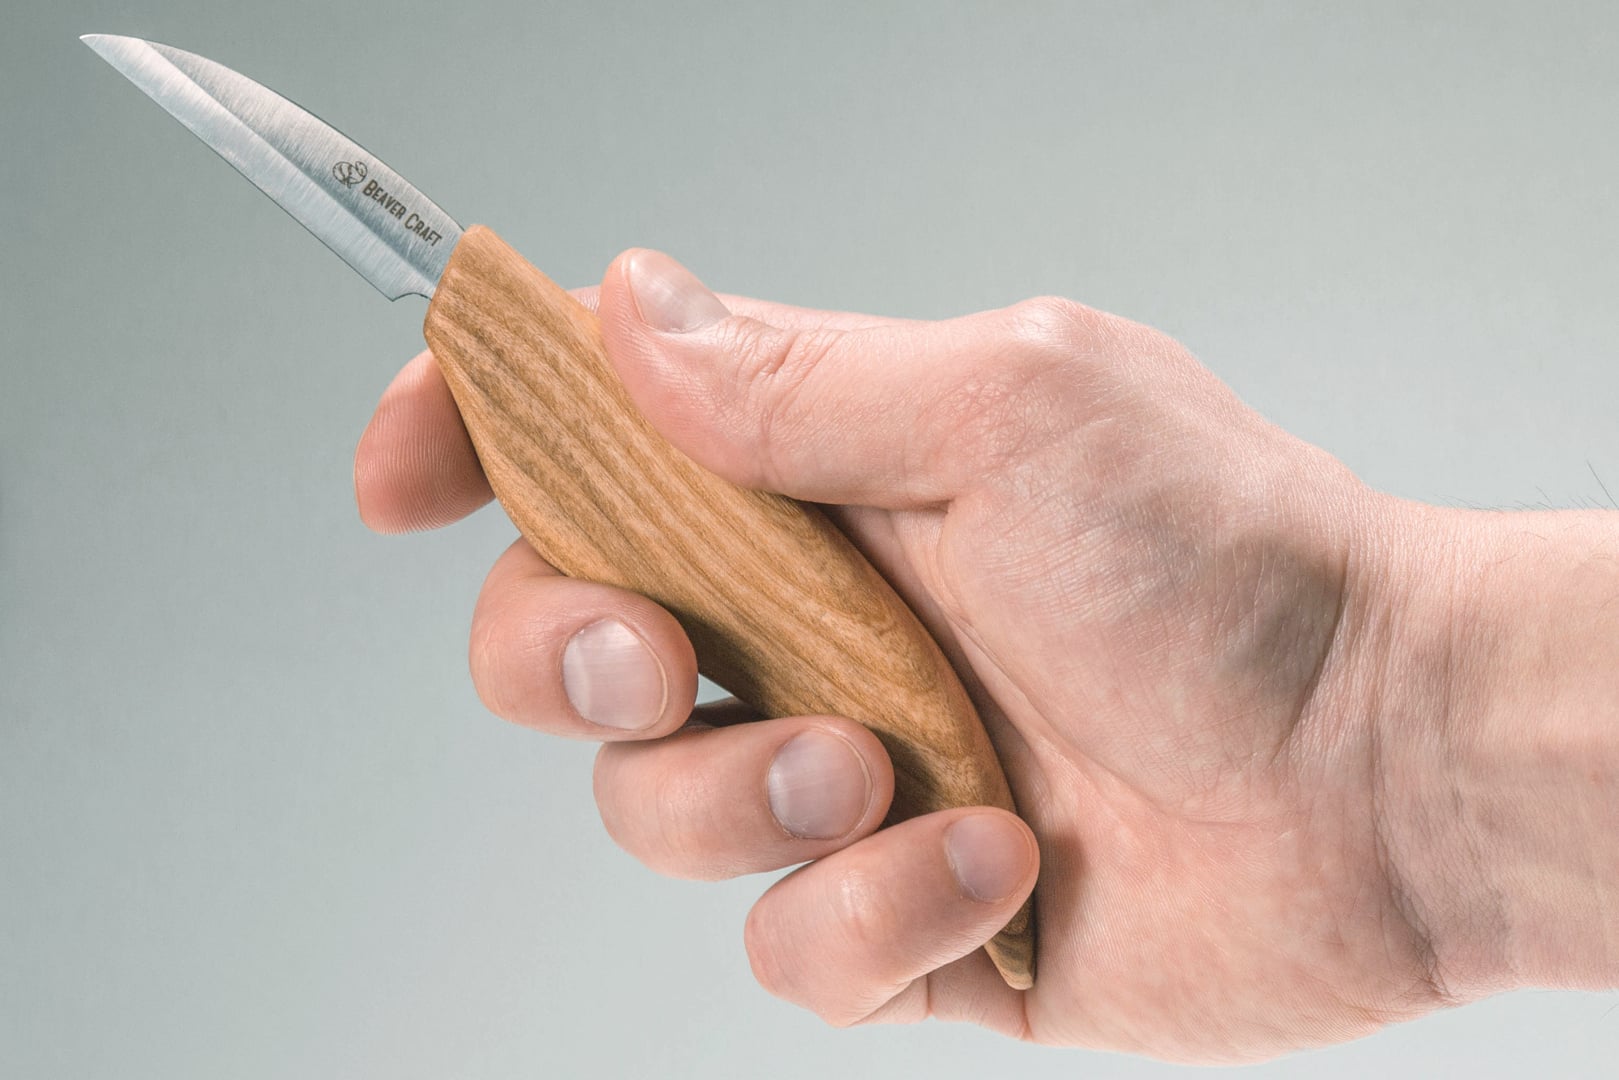 Modeling knife scalpel 13 blades case set, CATEGORIES \ House \ Others